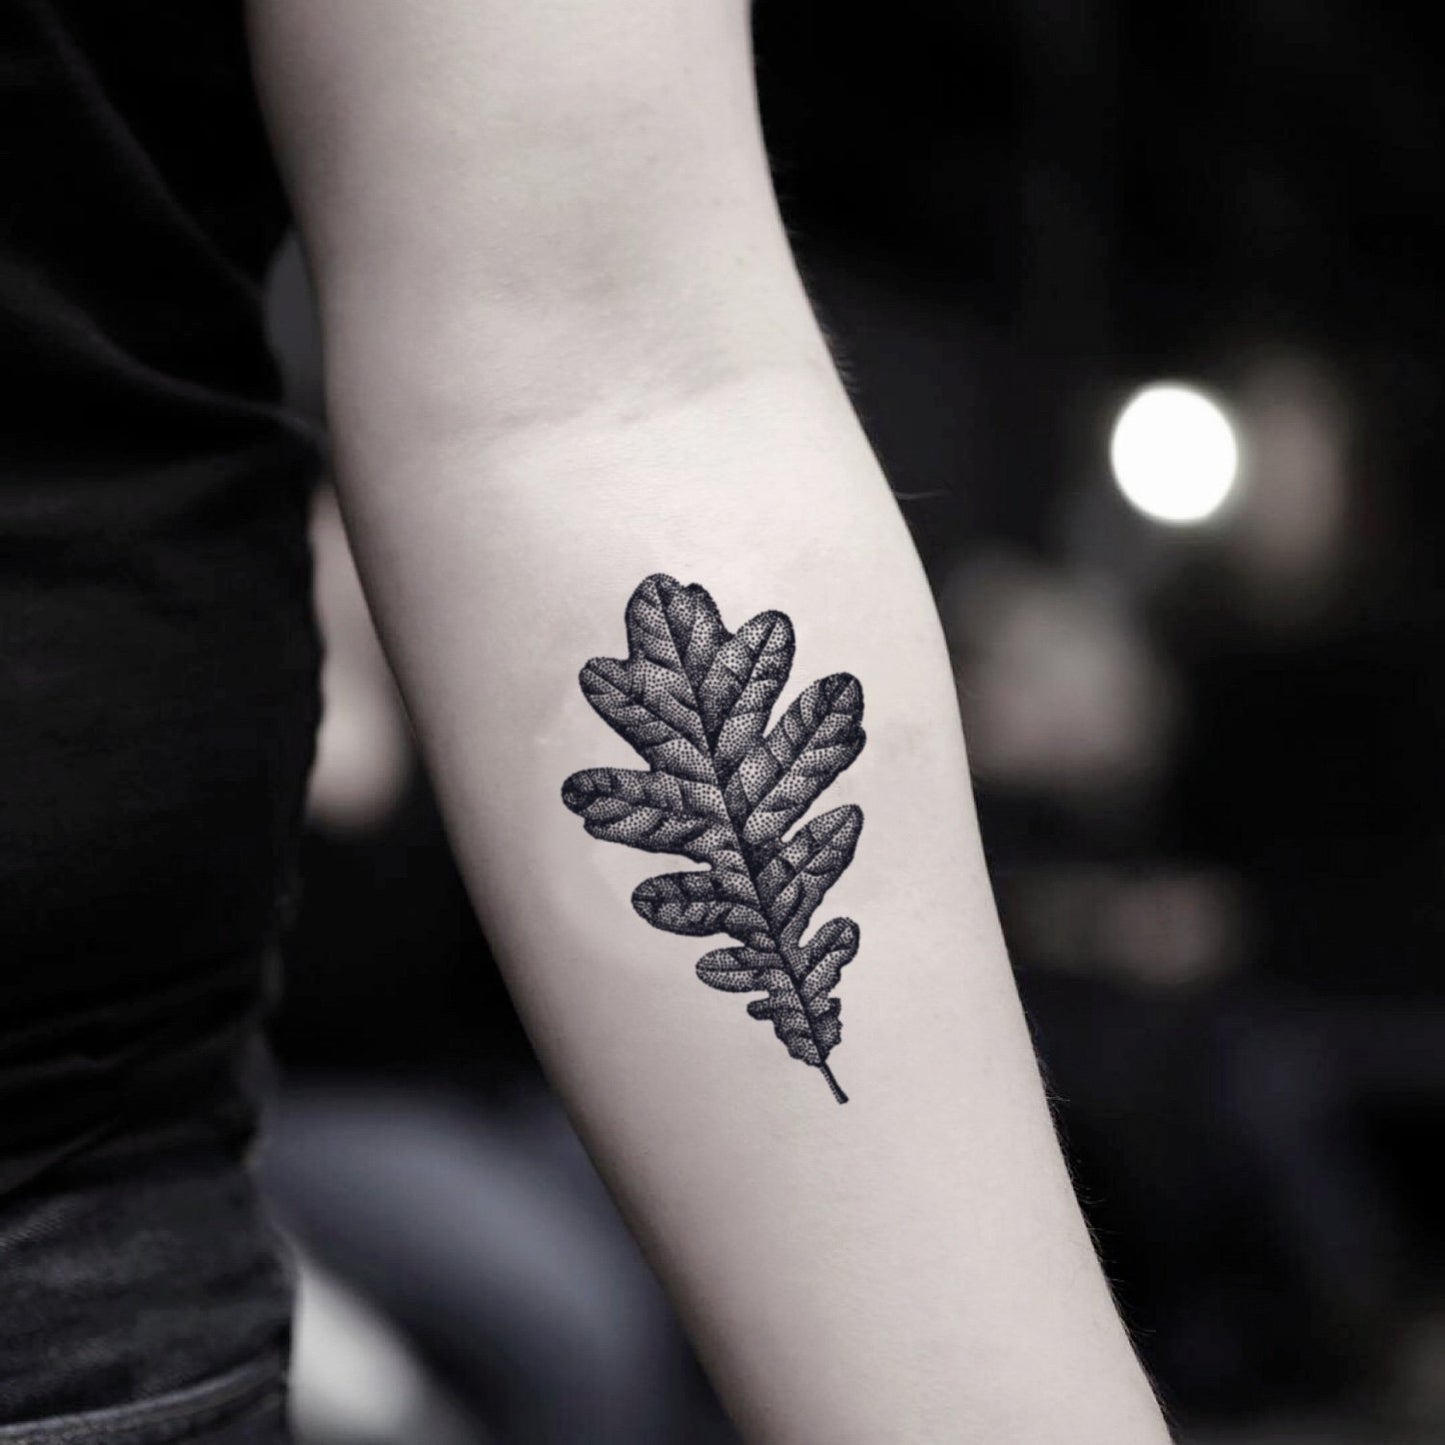 fake small oak leaf nature temporary tattoo sticker design idea on inner arm